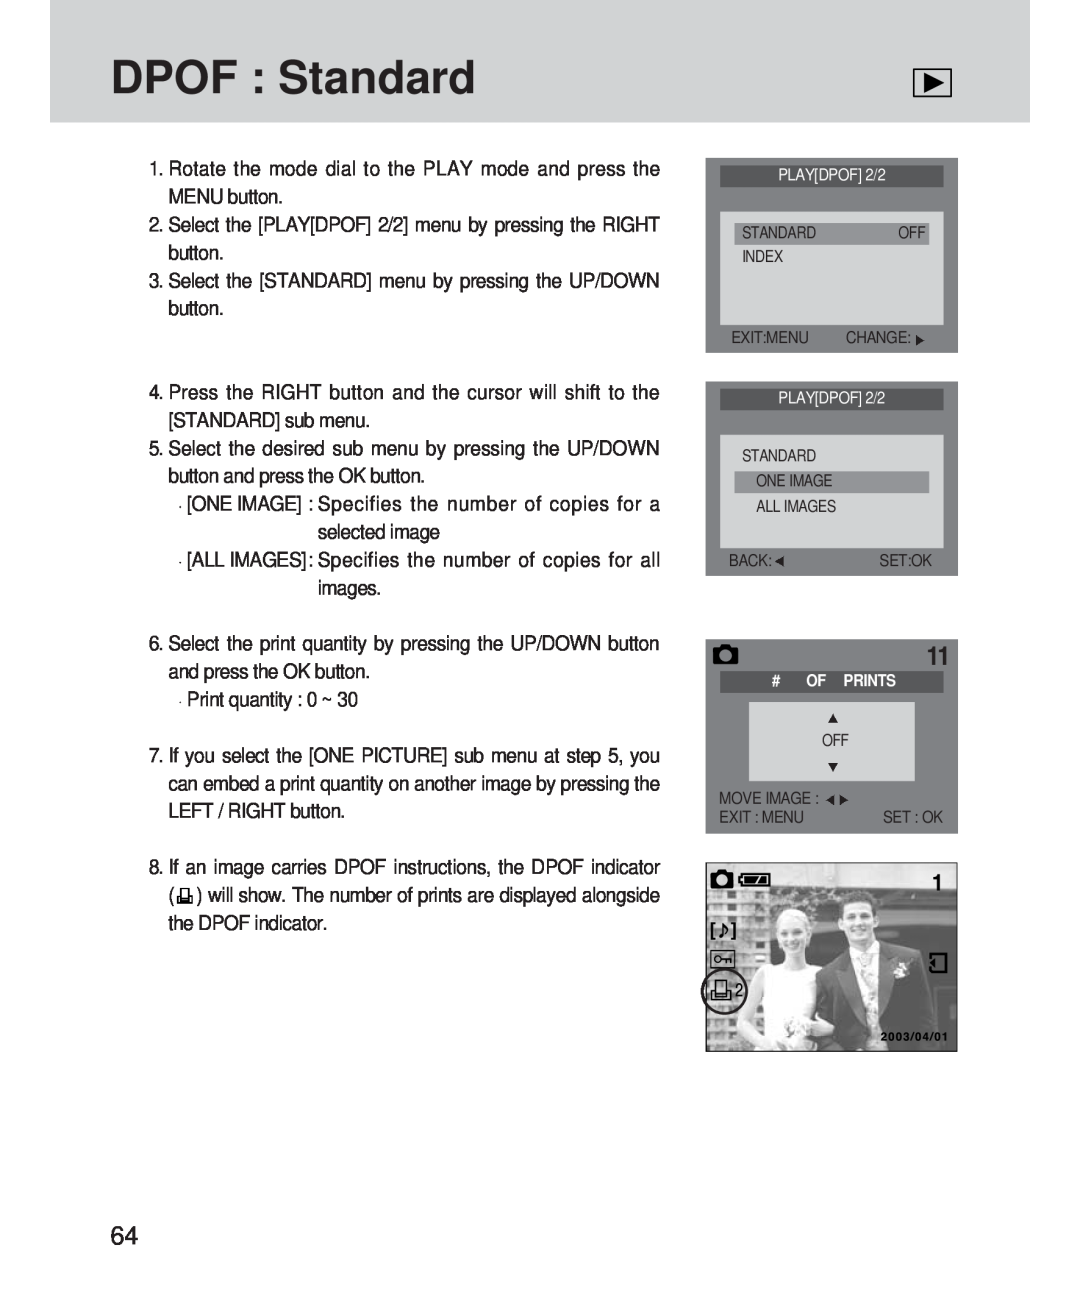 Samsung 420 manual DPOF Standard, # Of Prints 